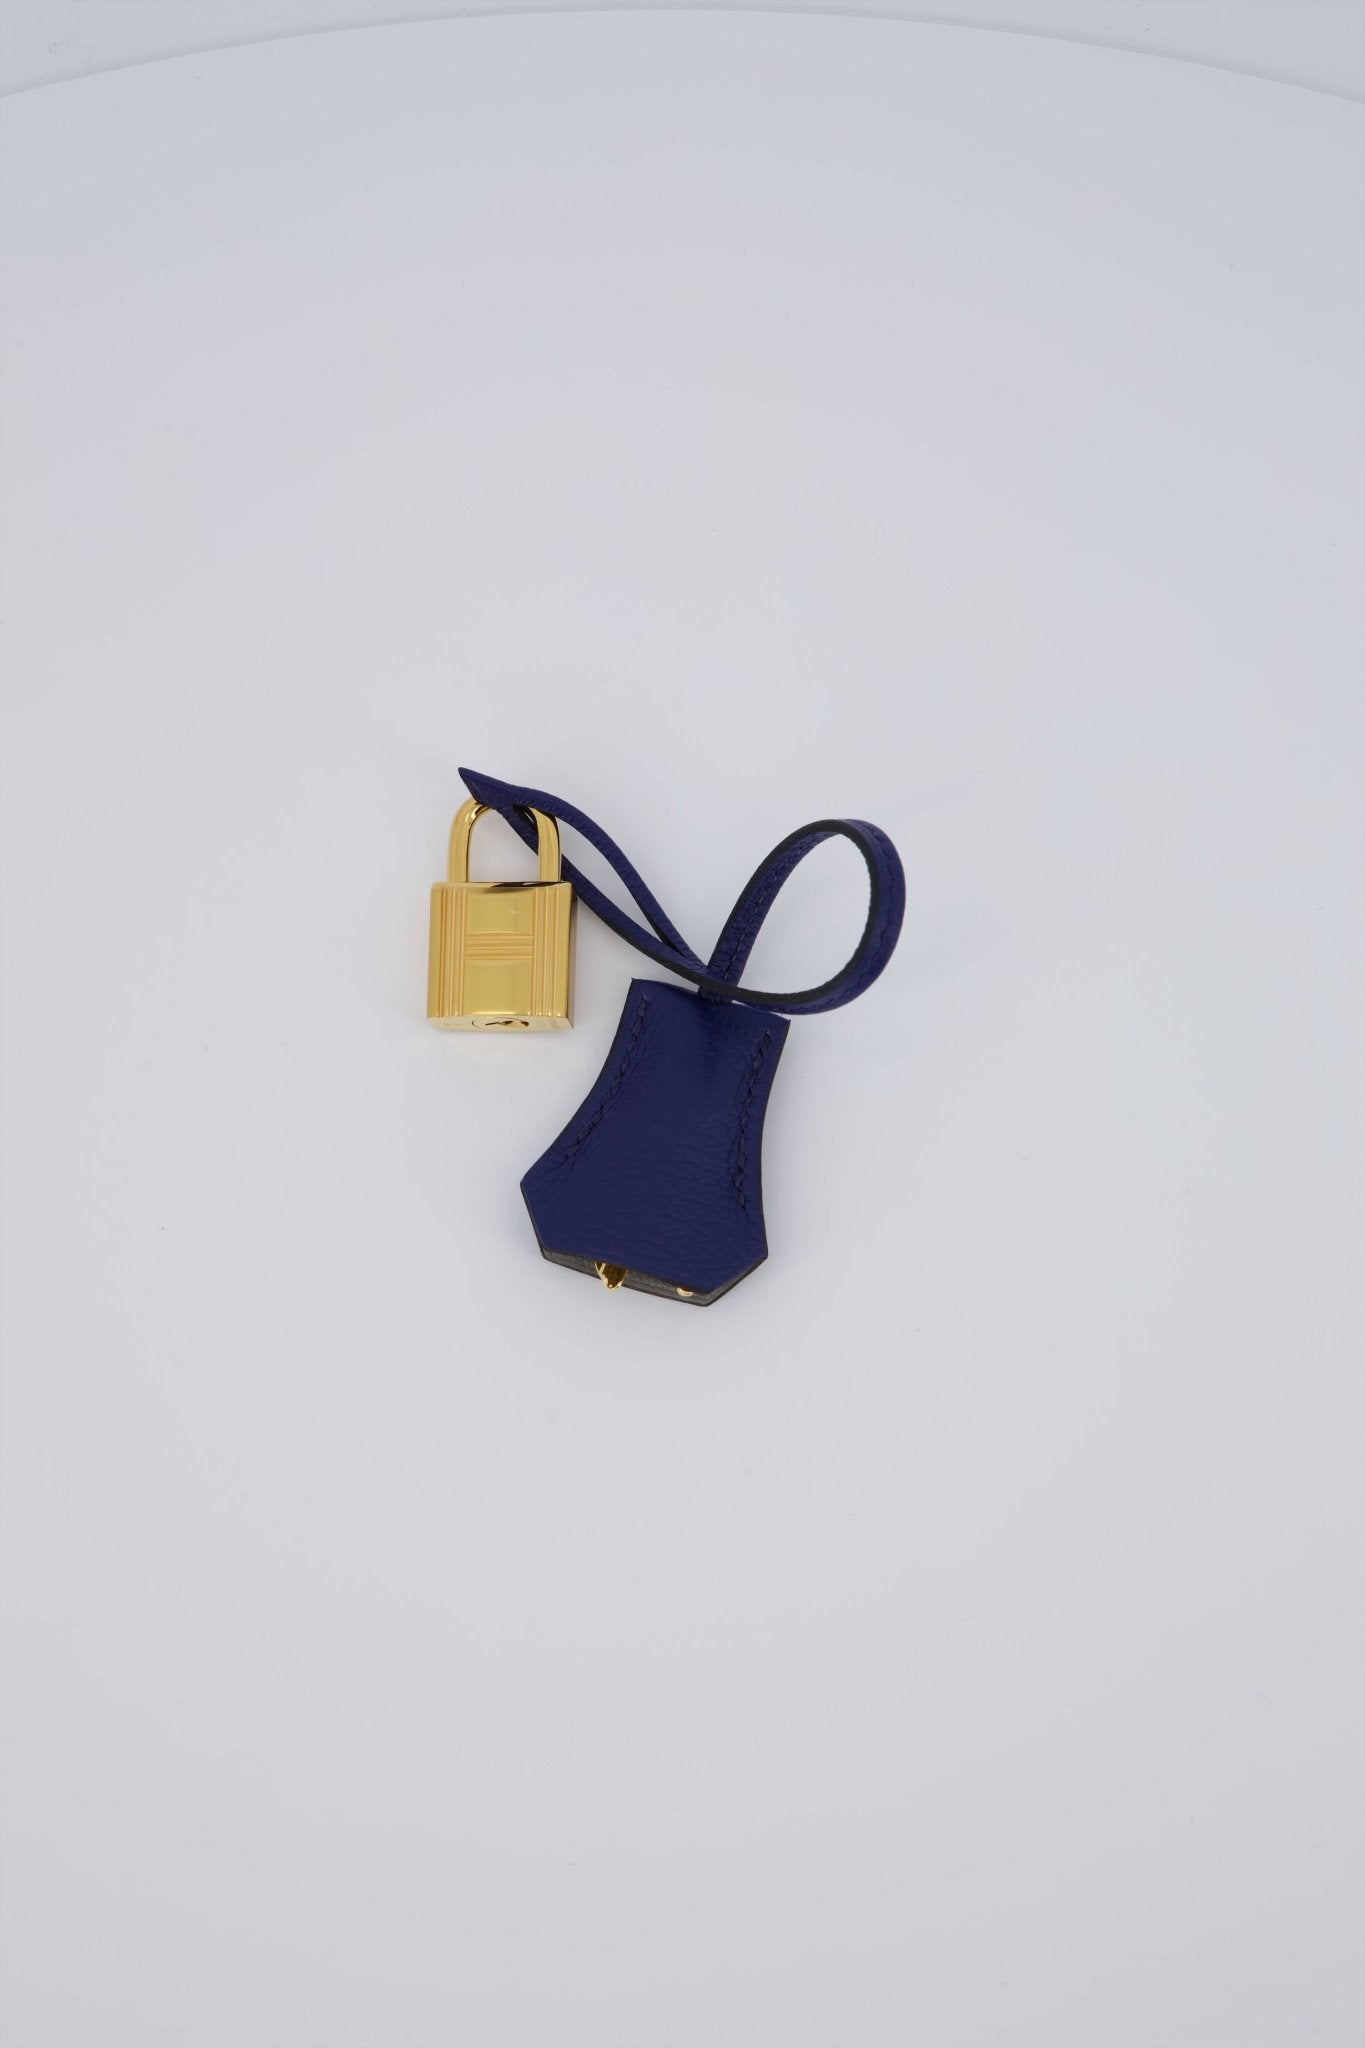 *Rare* Hermes Birkin 25 Handbag Blue Saphir/Gris Mouette Taurillon Novillo Leather With Gold Hardware. Investment Piece